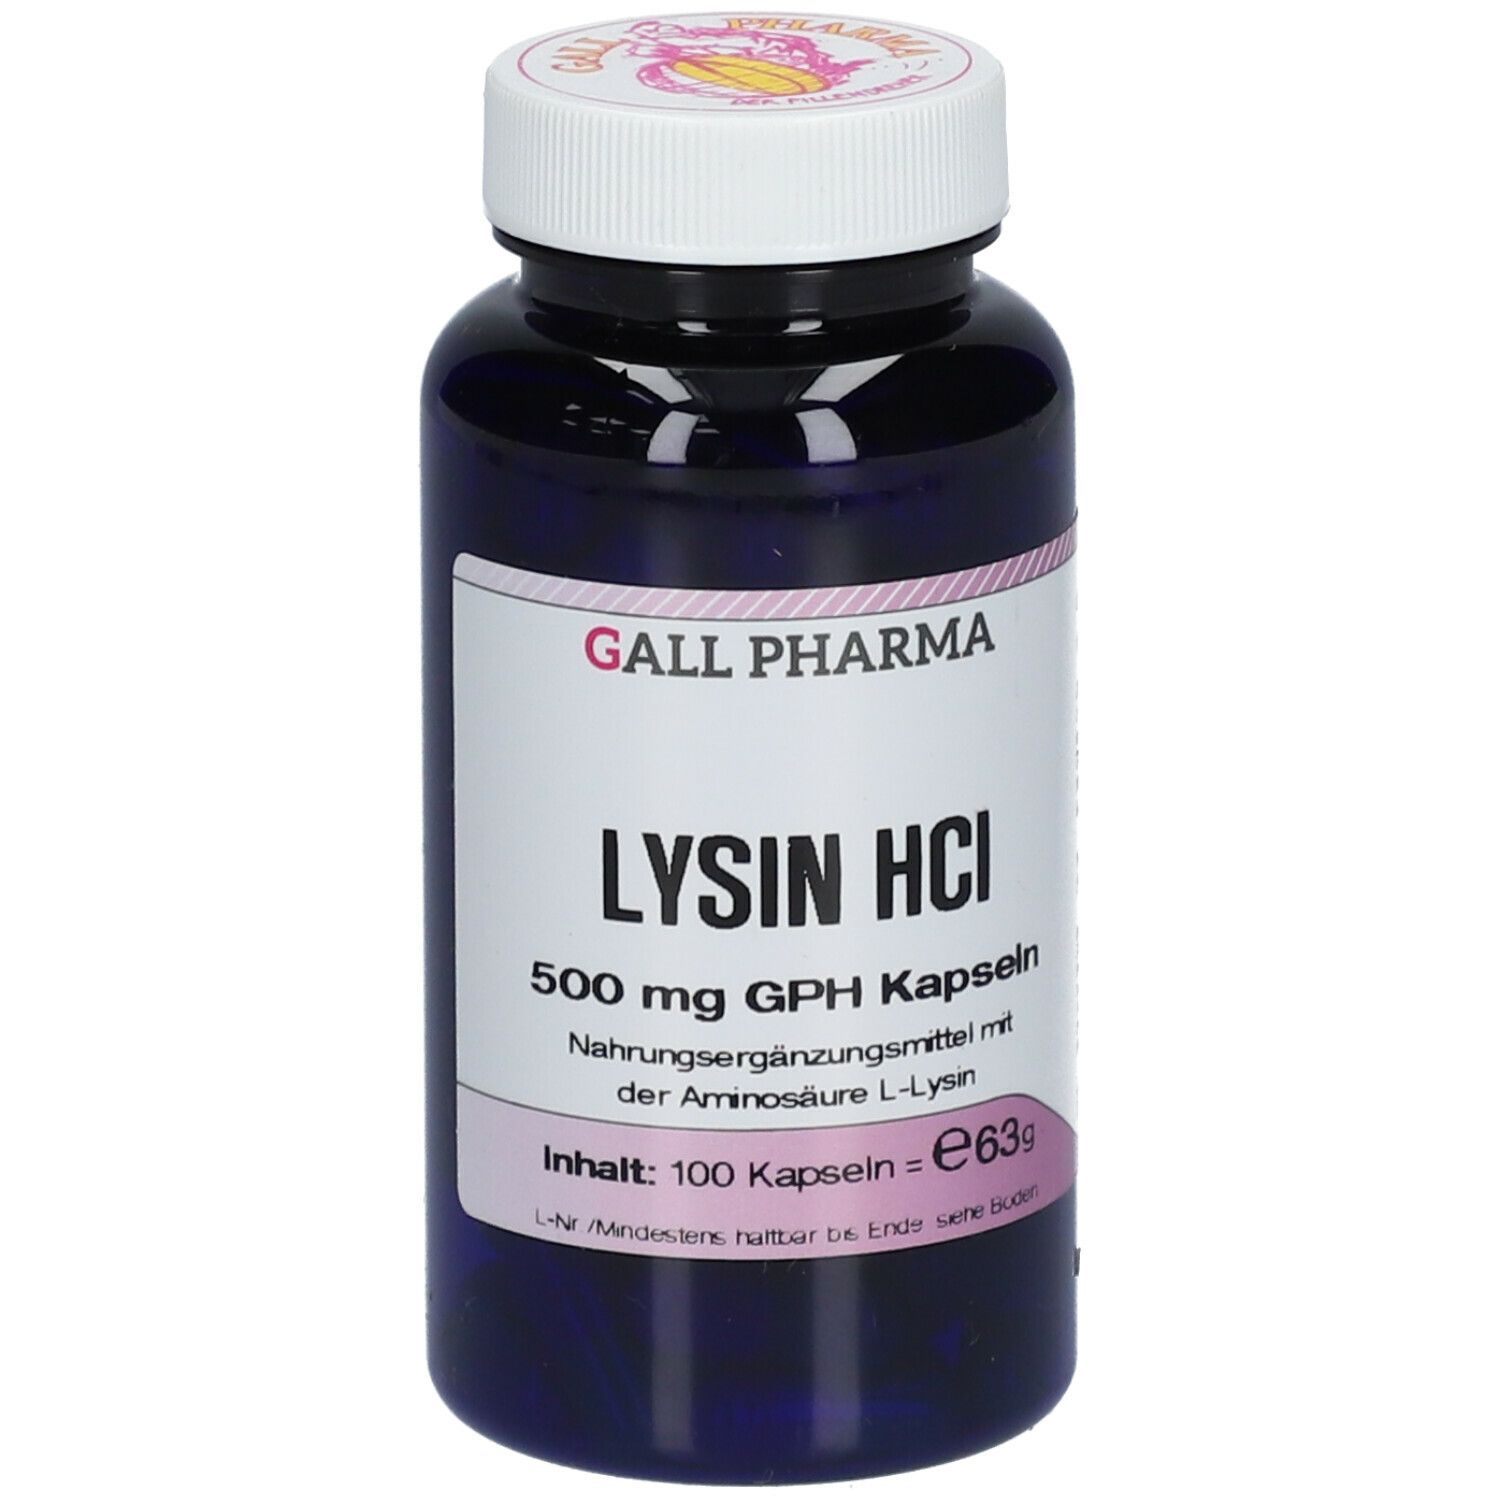 GALL PHARMA Lysine HCl 500 mg GPH Capsules